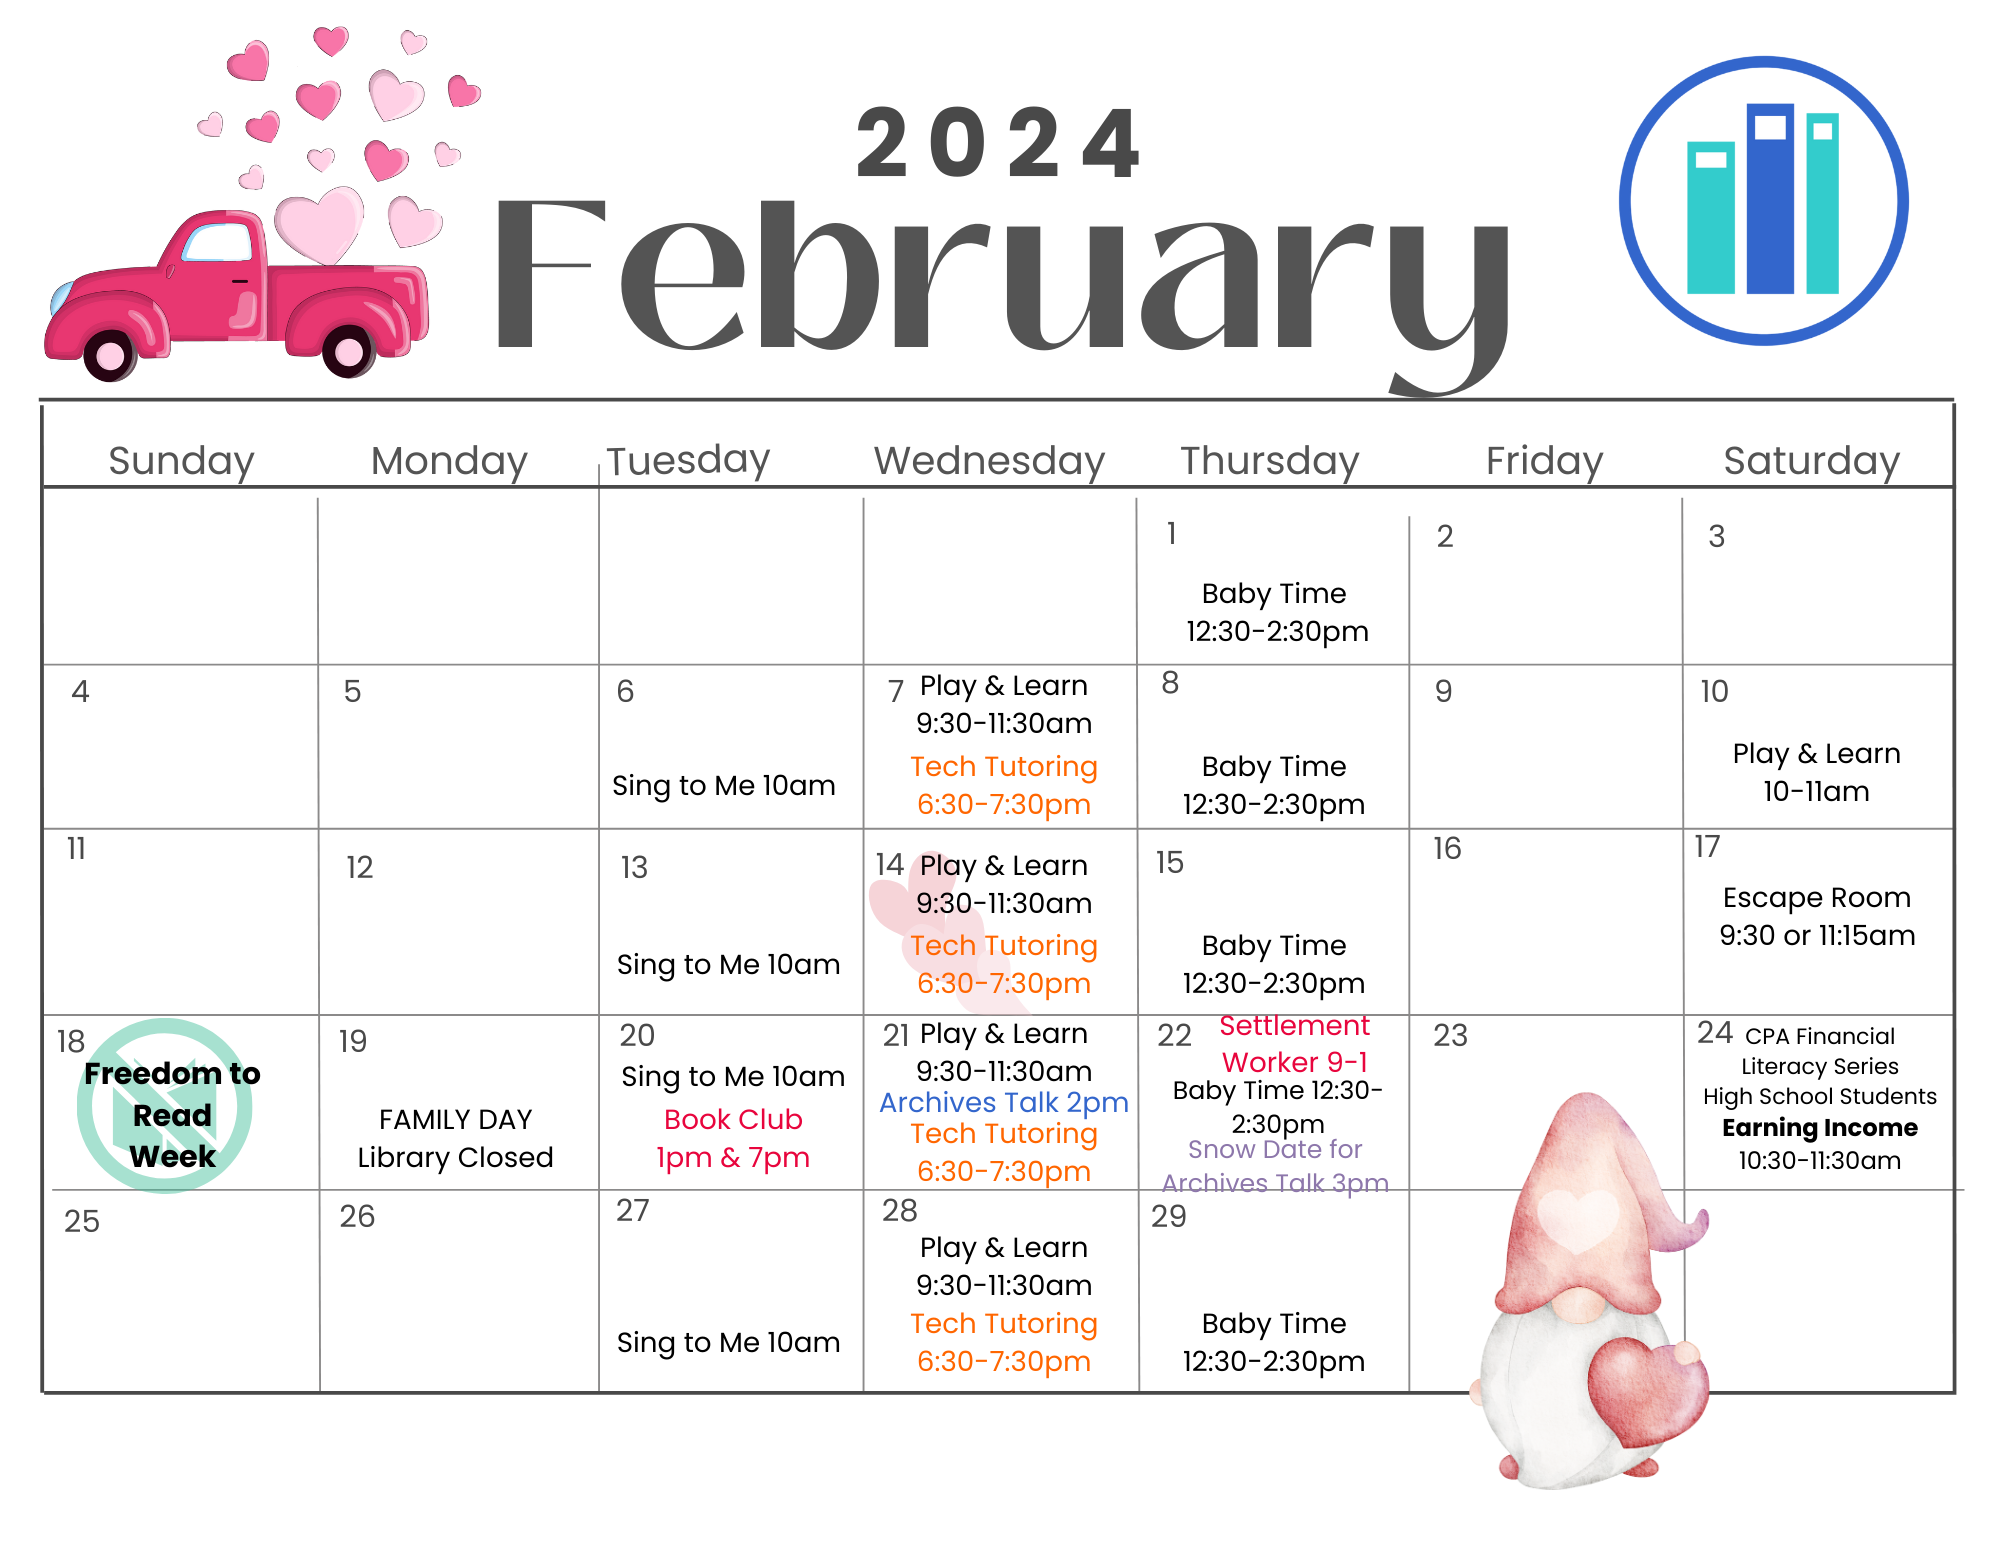 February program calendar